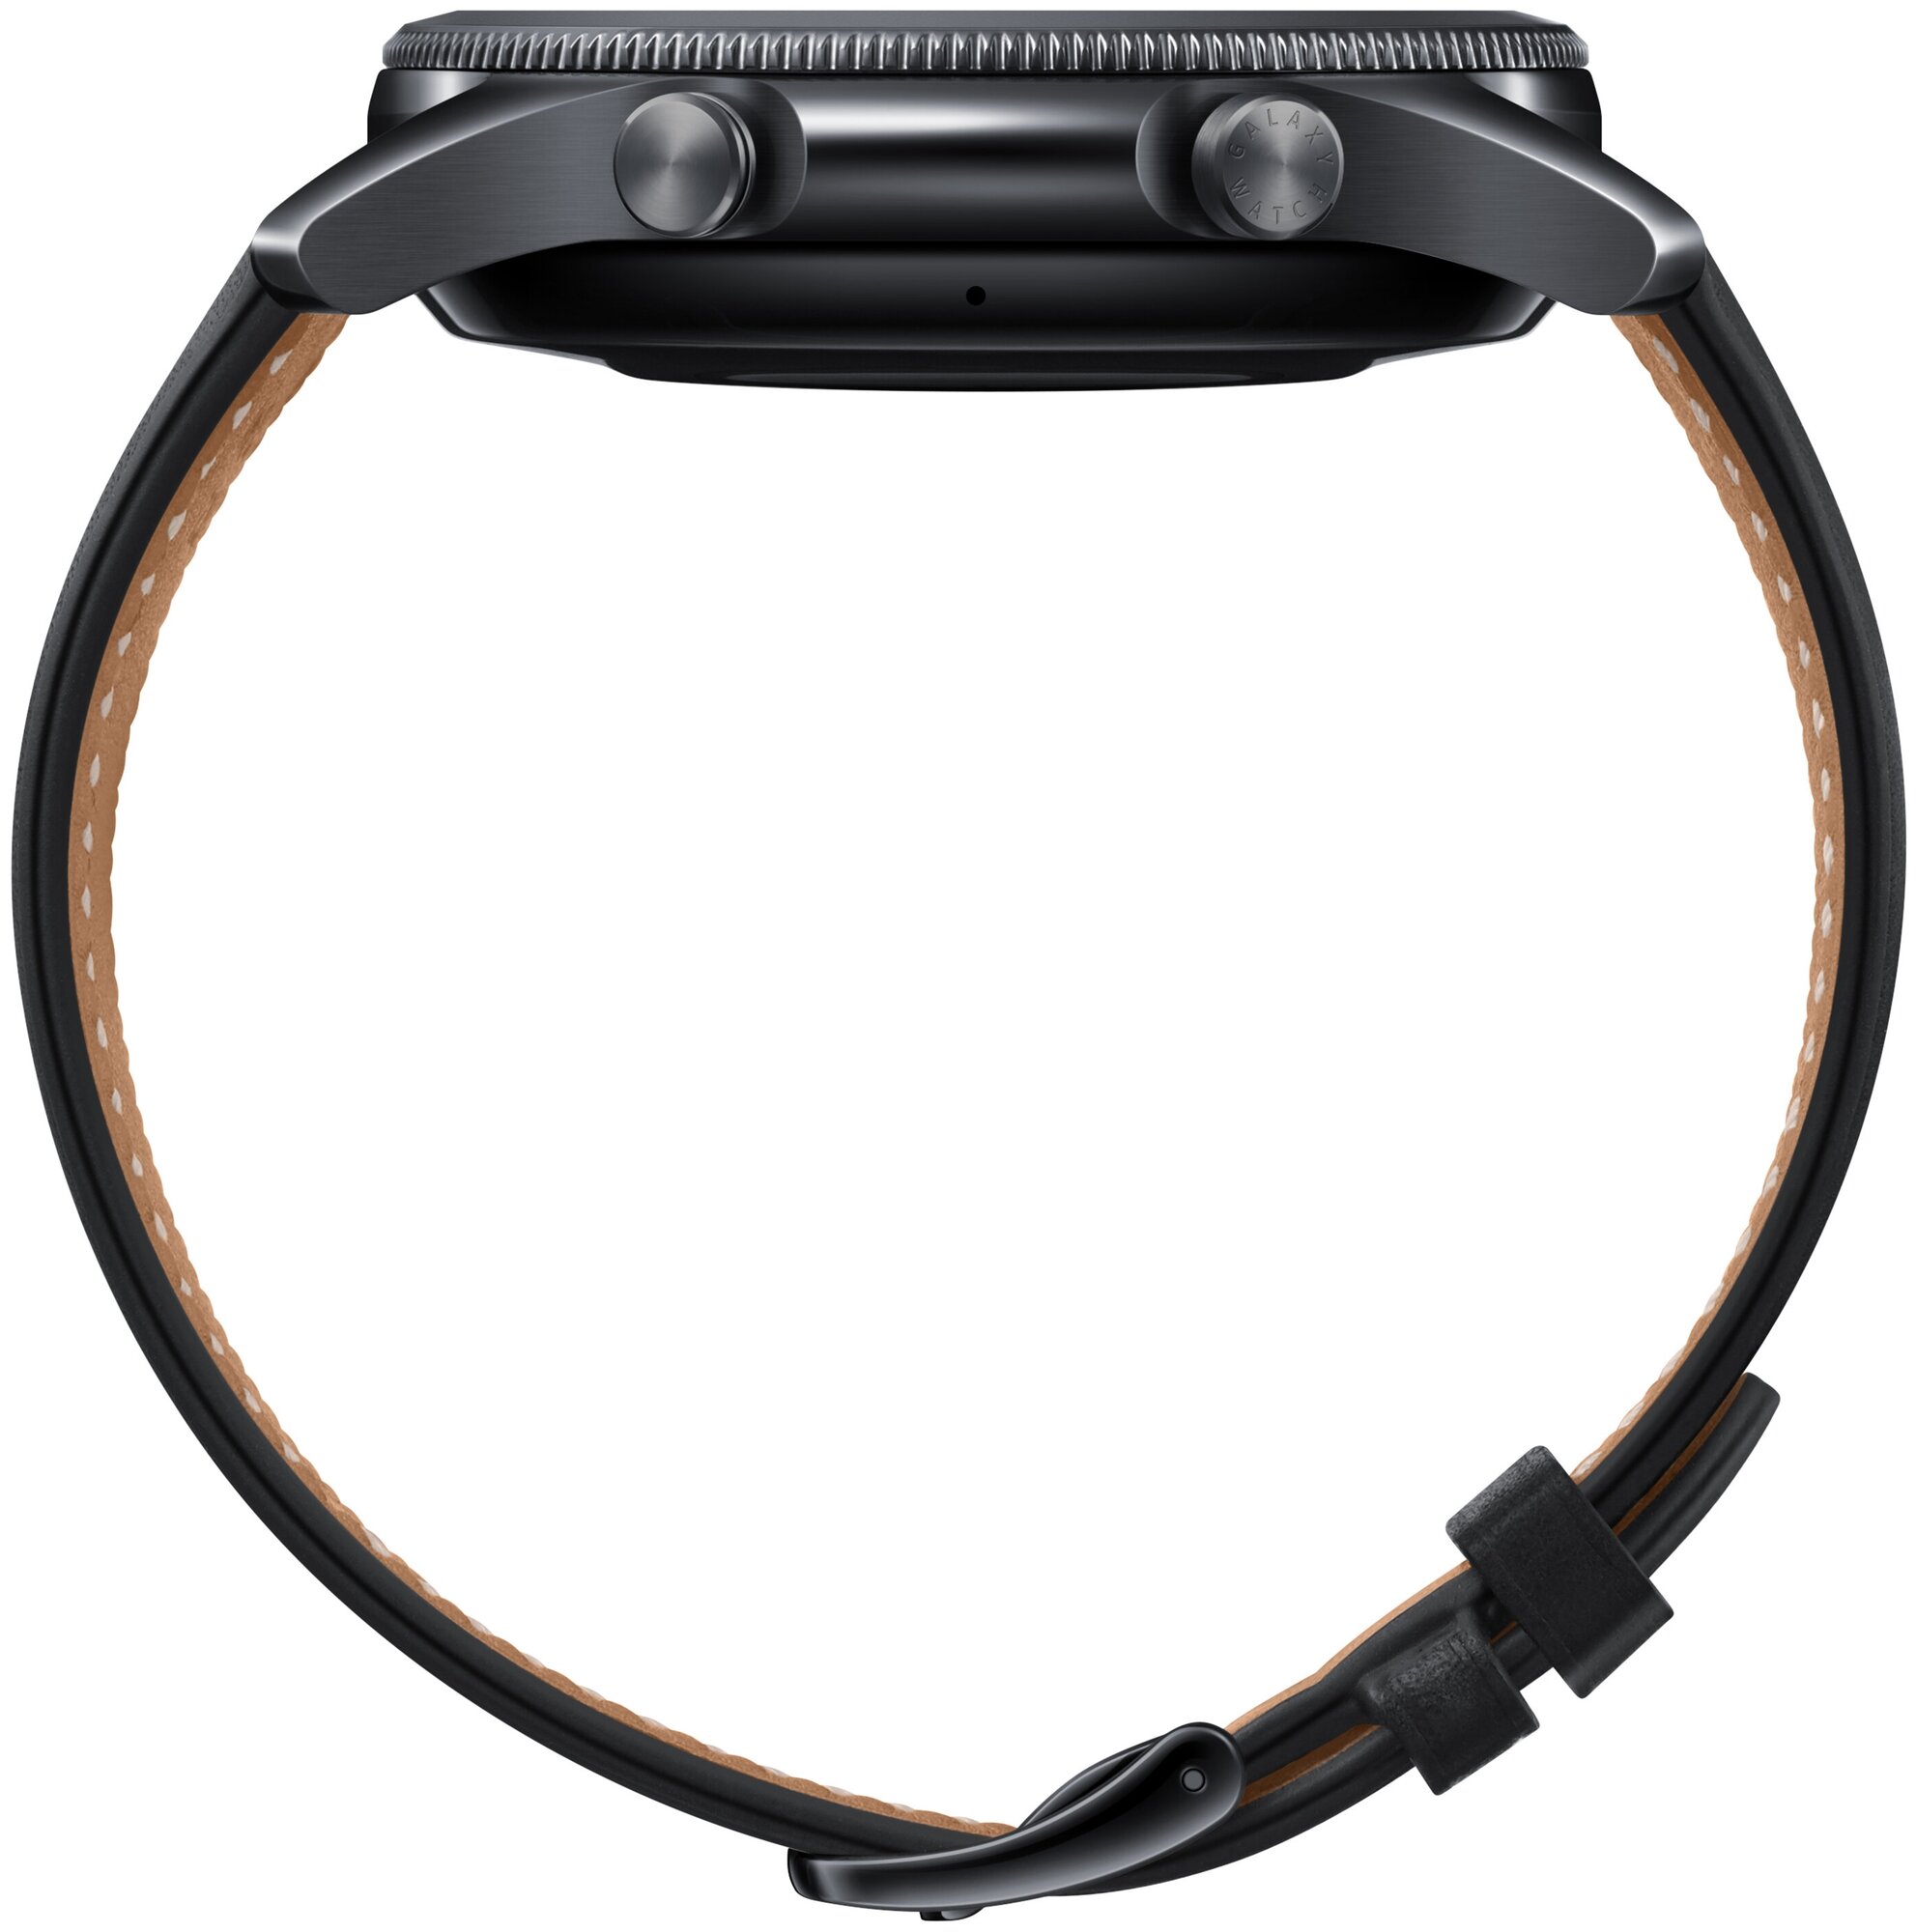 Умные часы Samsung Galaxy Watch 3